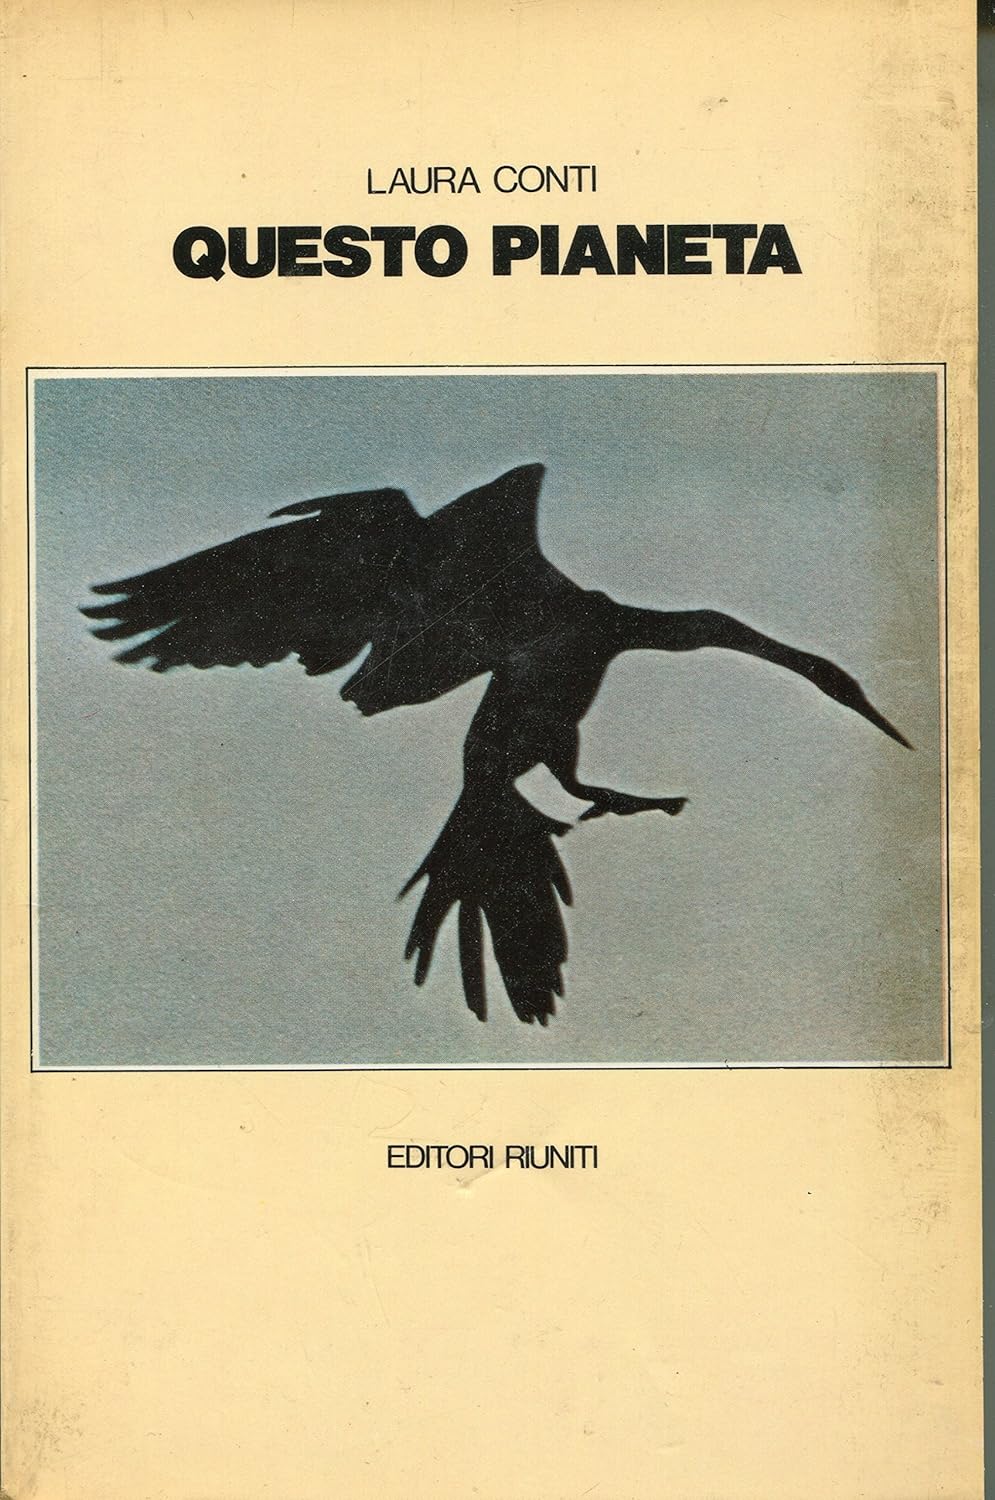 Questo pianeta (Italian language, 1983, Editori riuniti)